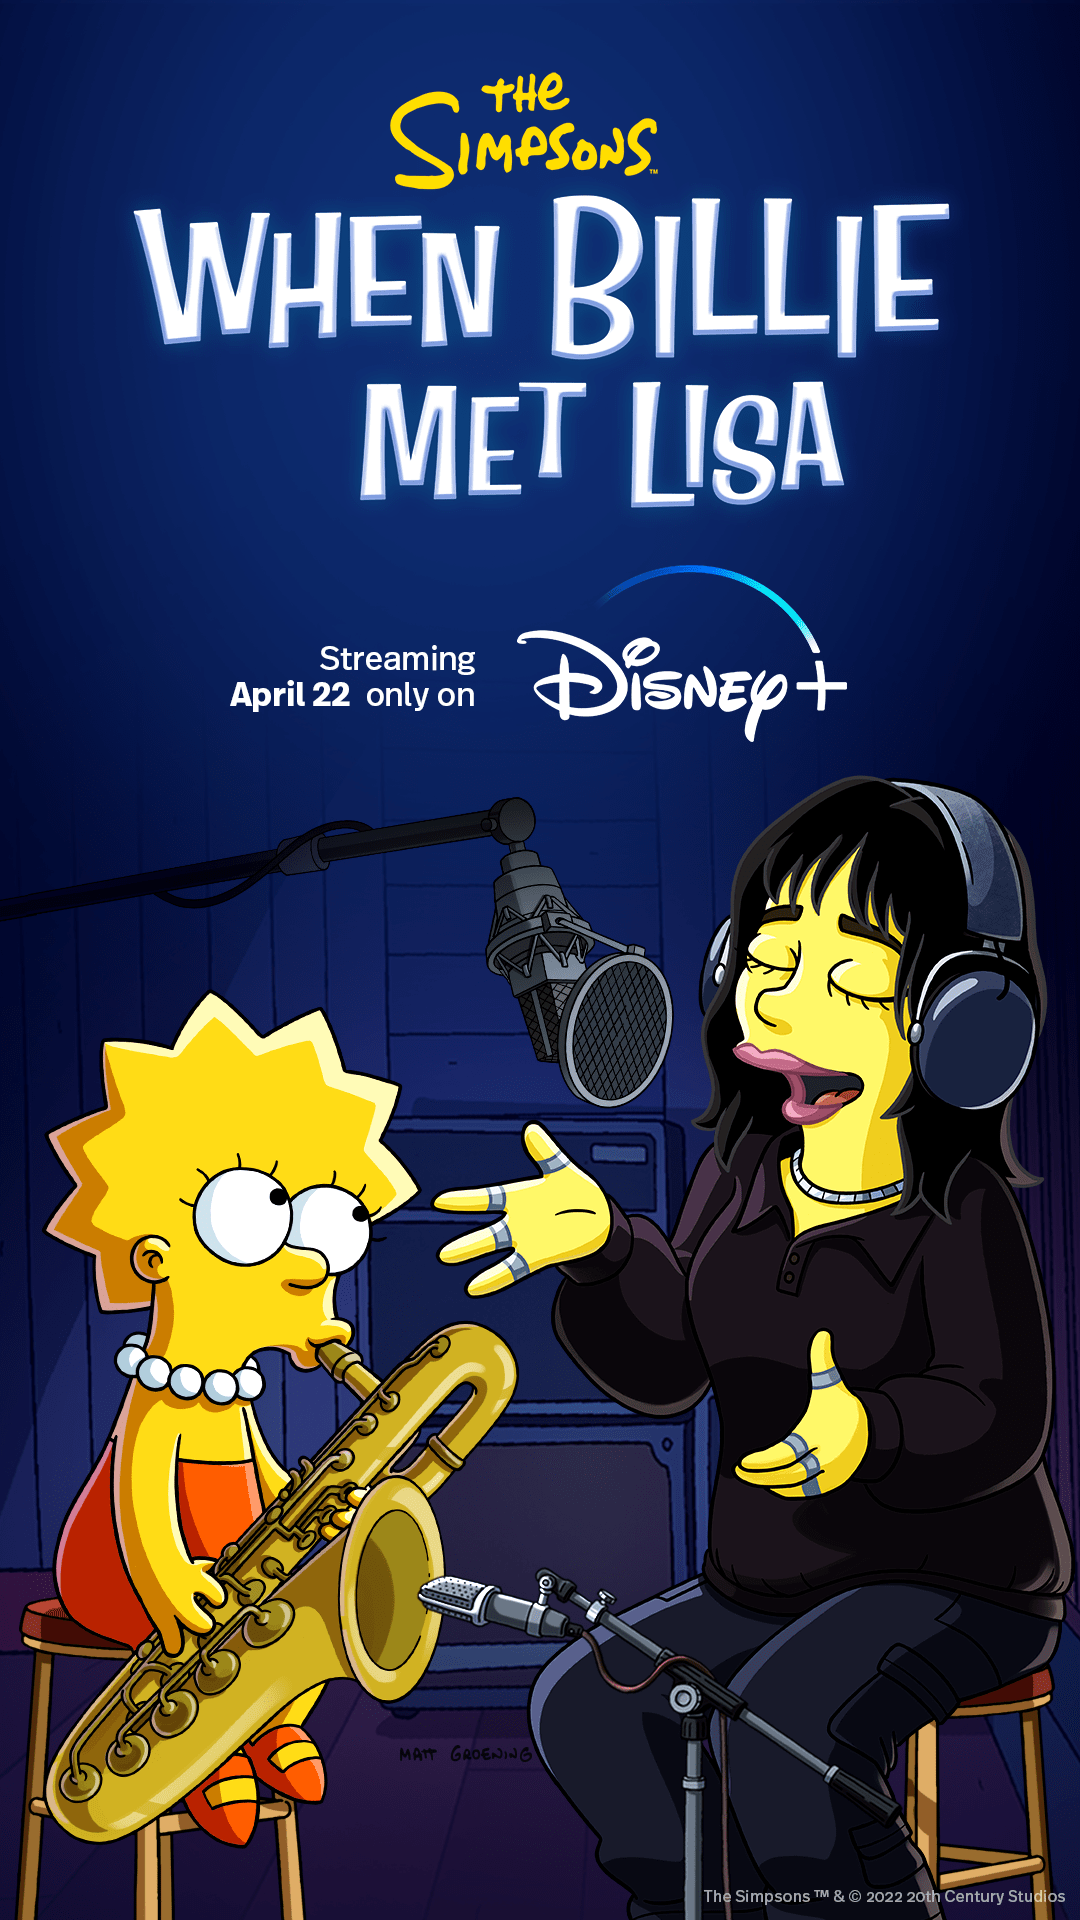 New Short: ‘The Simpsons When Billie Met Lisa’